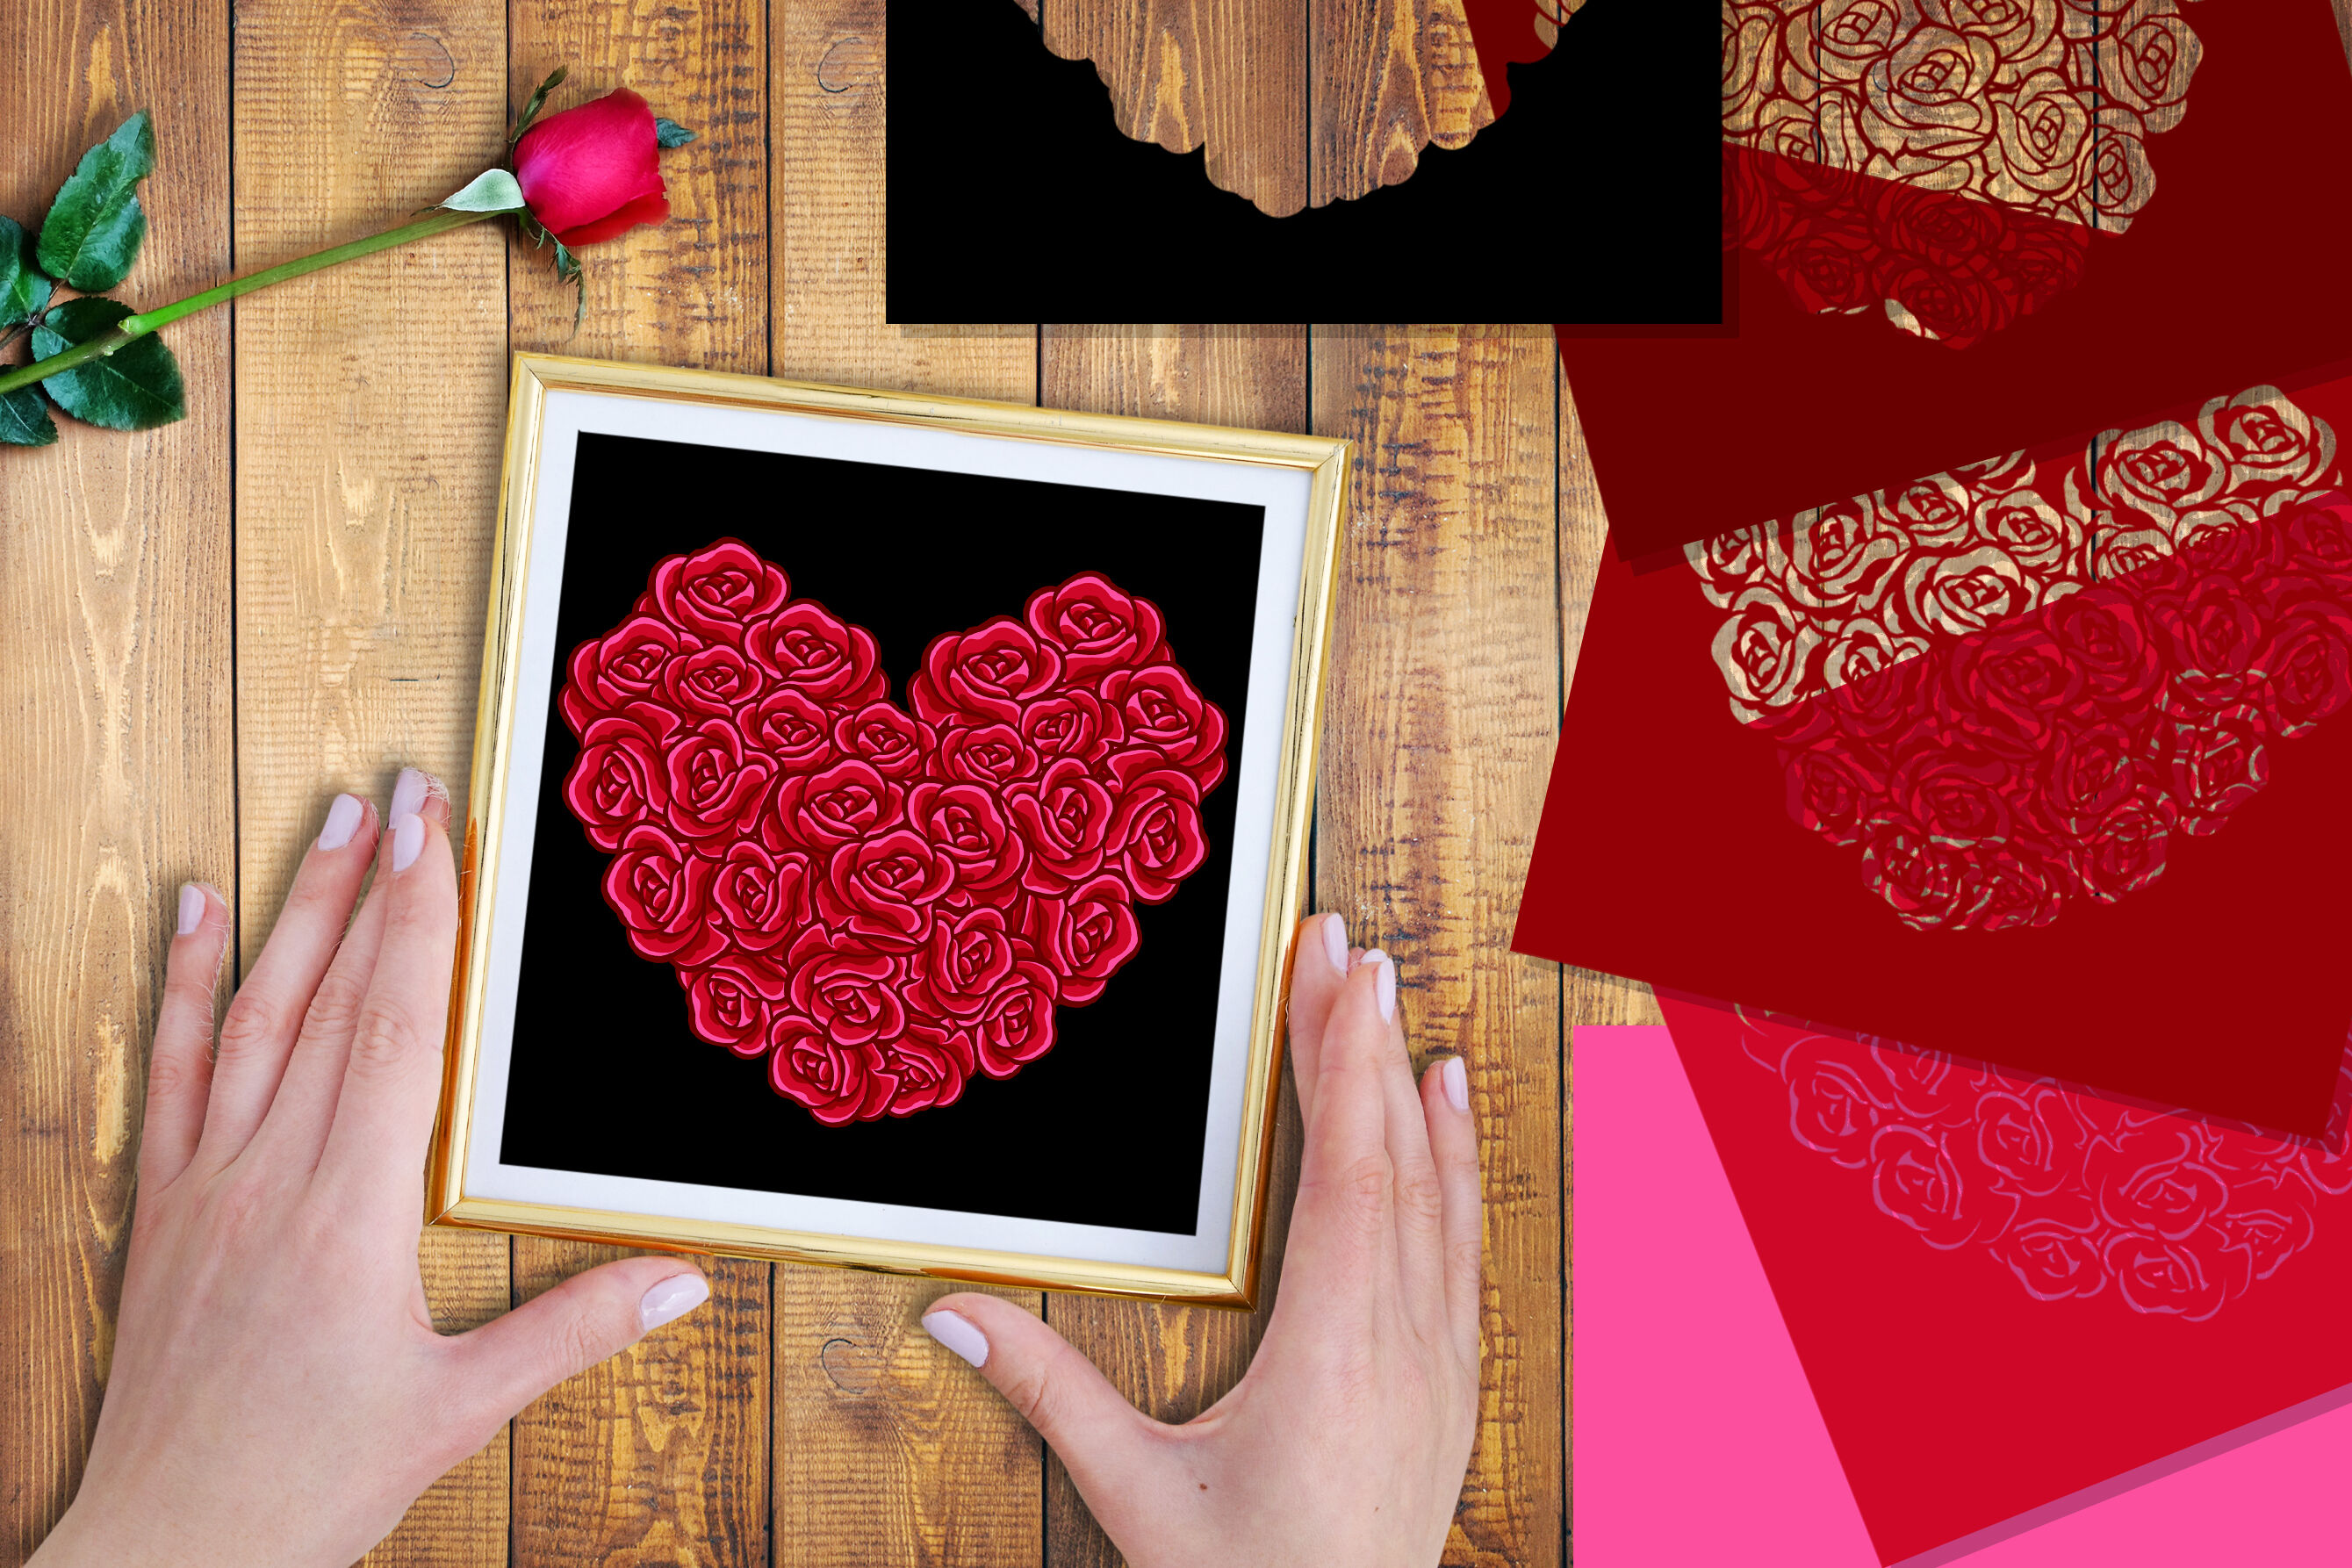 Download 3d Valentine Rose Heart Multi Layered Flowers Papercut 3 By Mandala Creator Thehungryjpeg Com